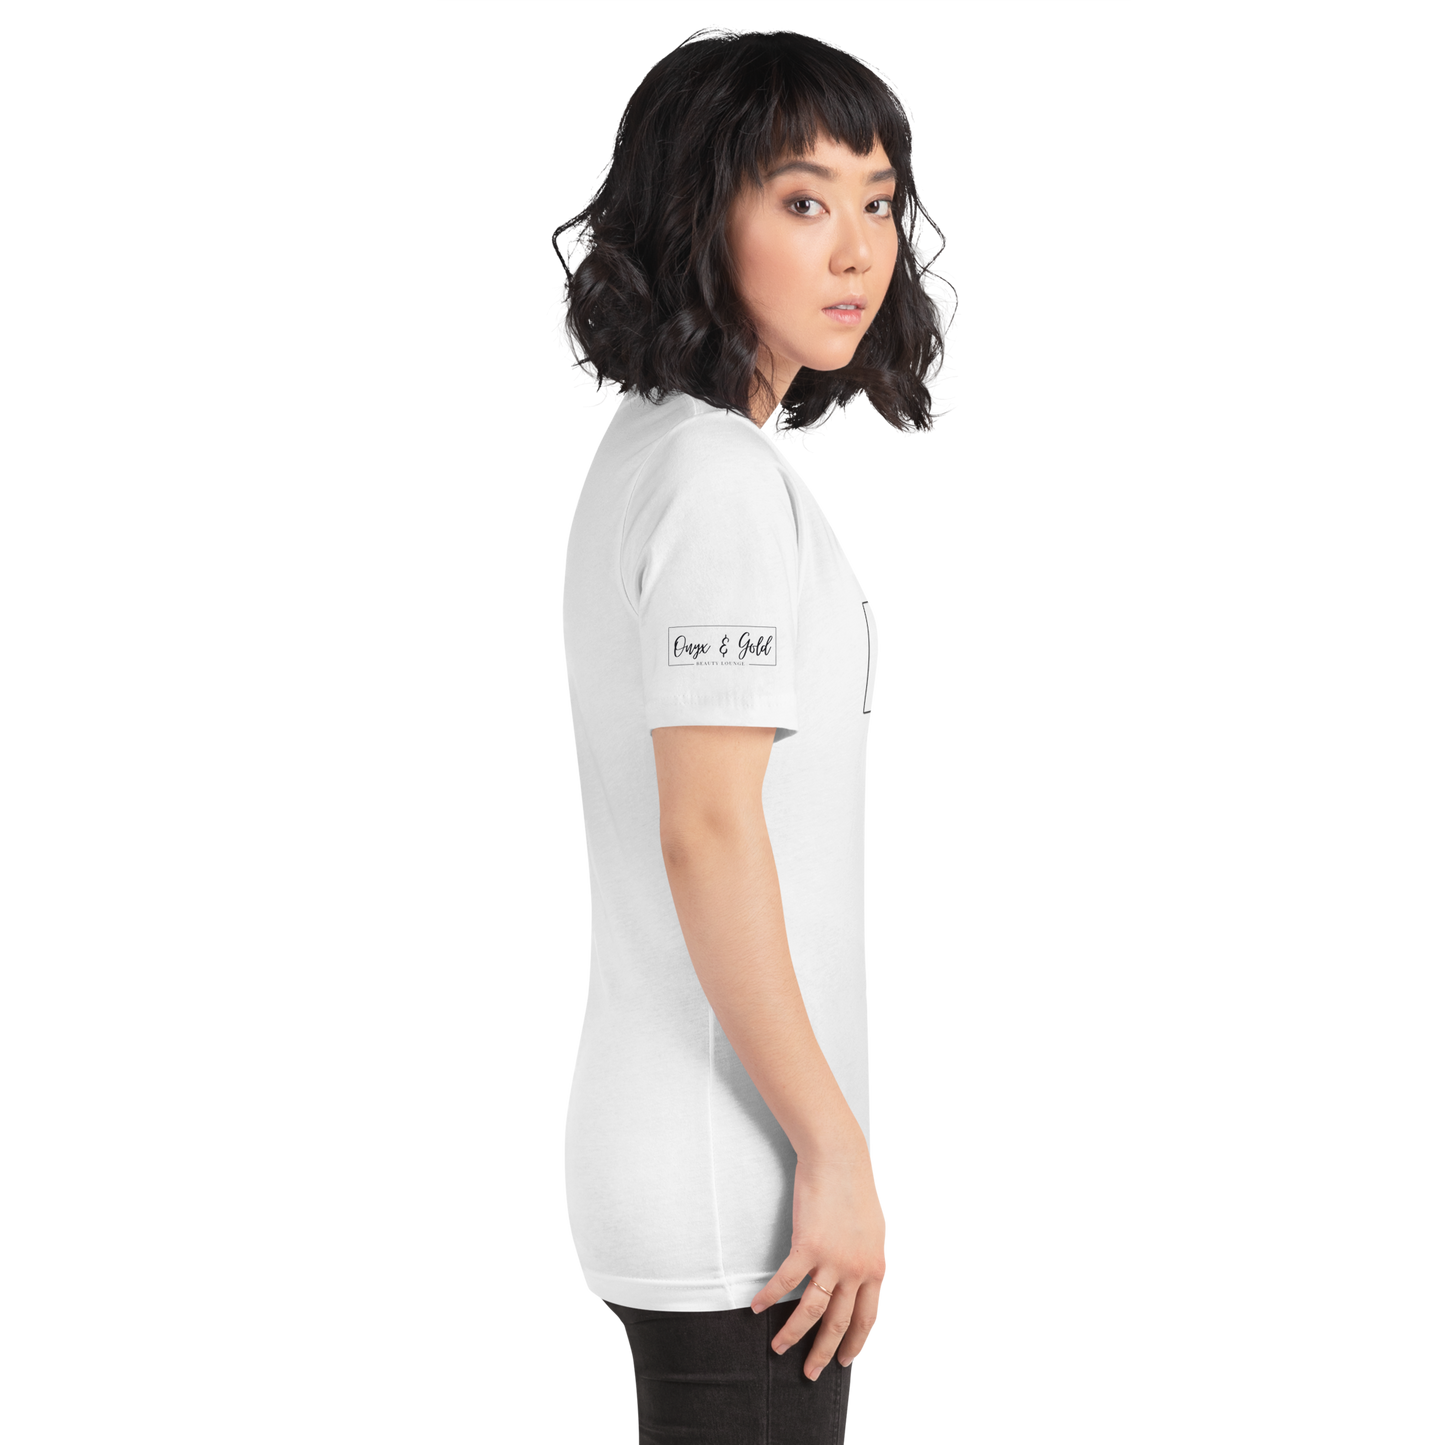 Onyx & Gold Unisex t-shirt - Bella + Canvas 3001 - OG Black Logo w/ Logo on Right sleeve